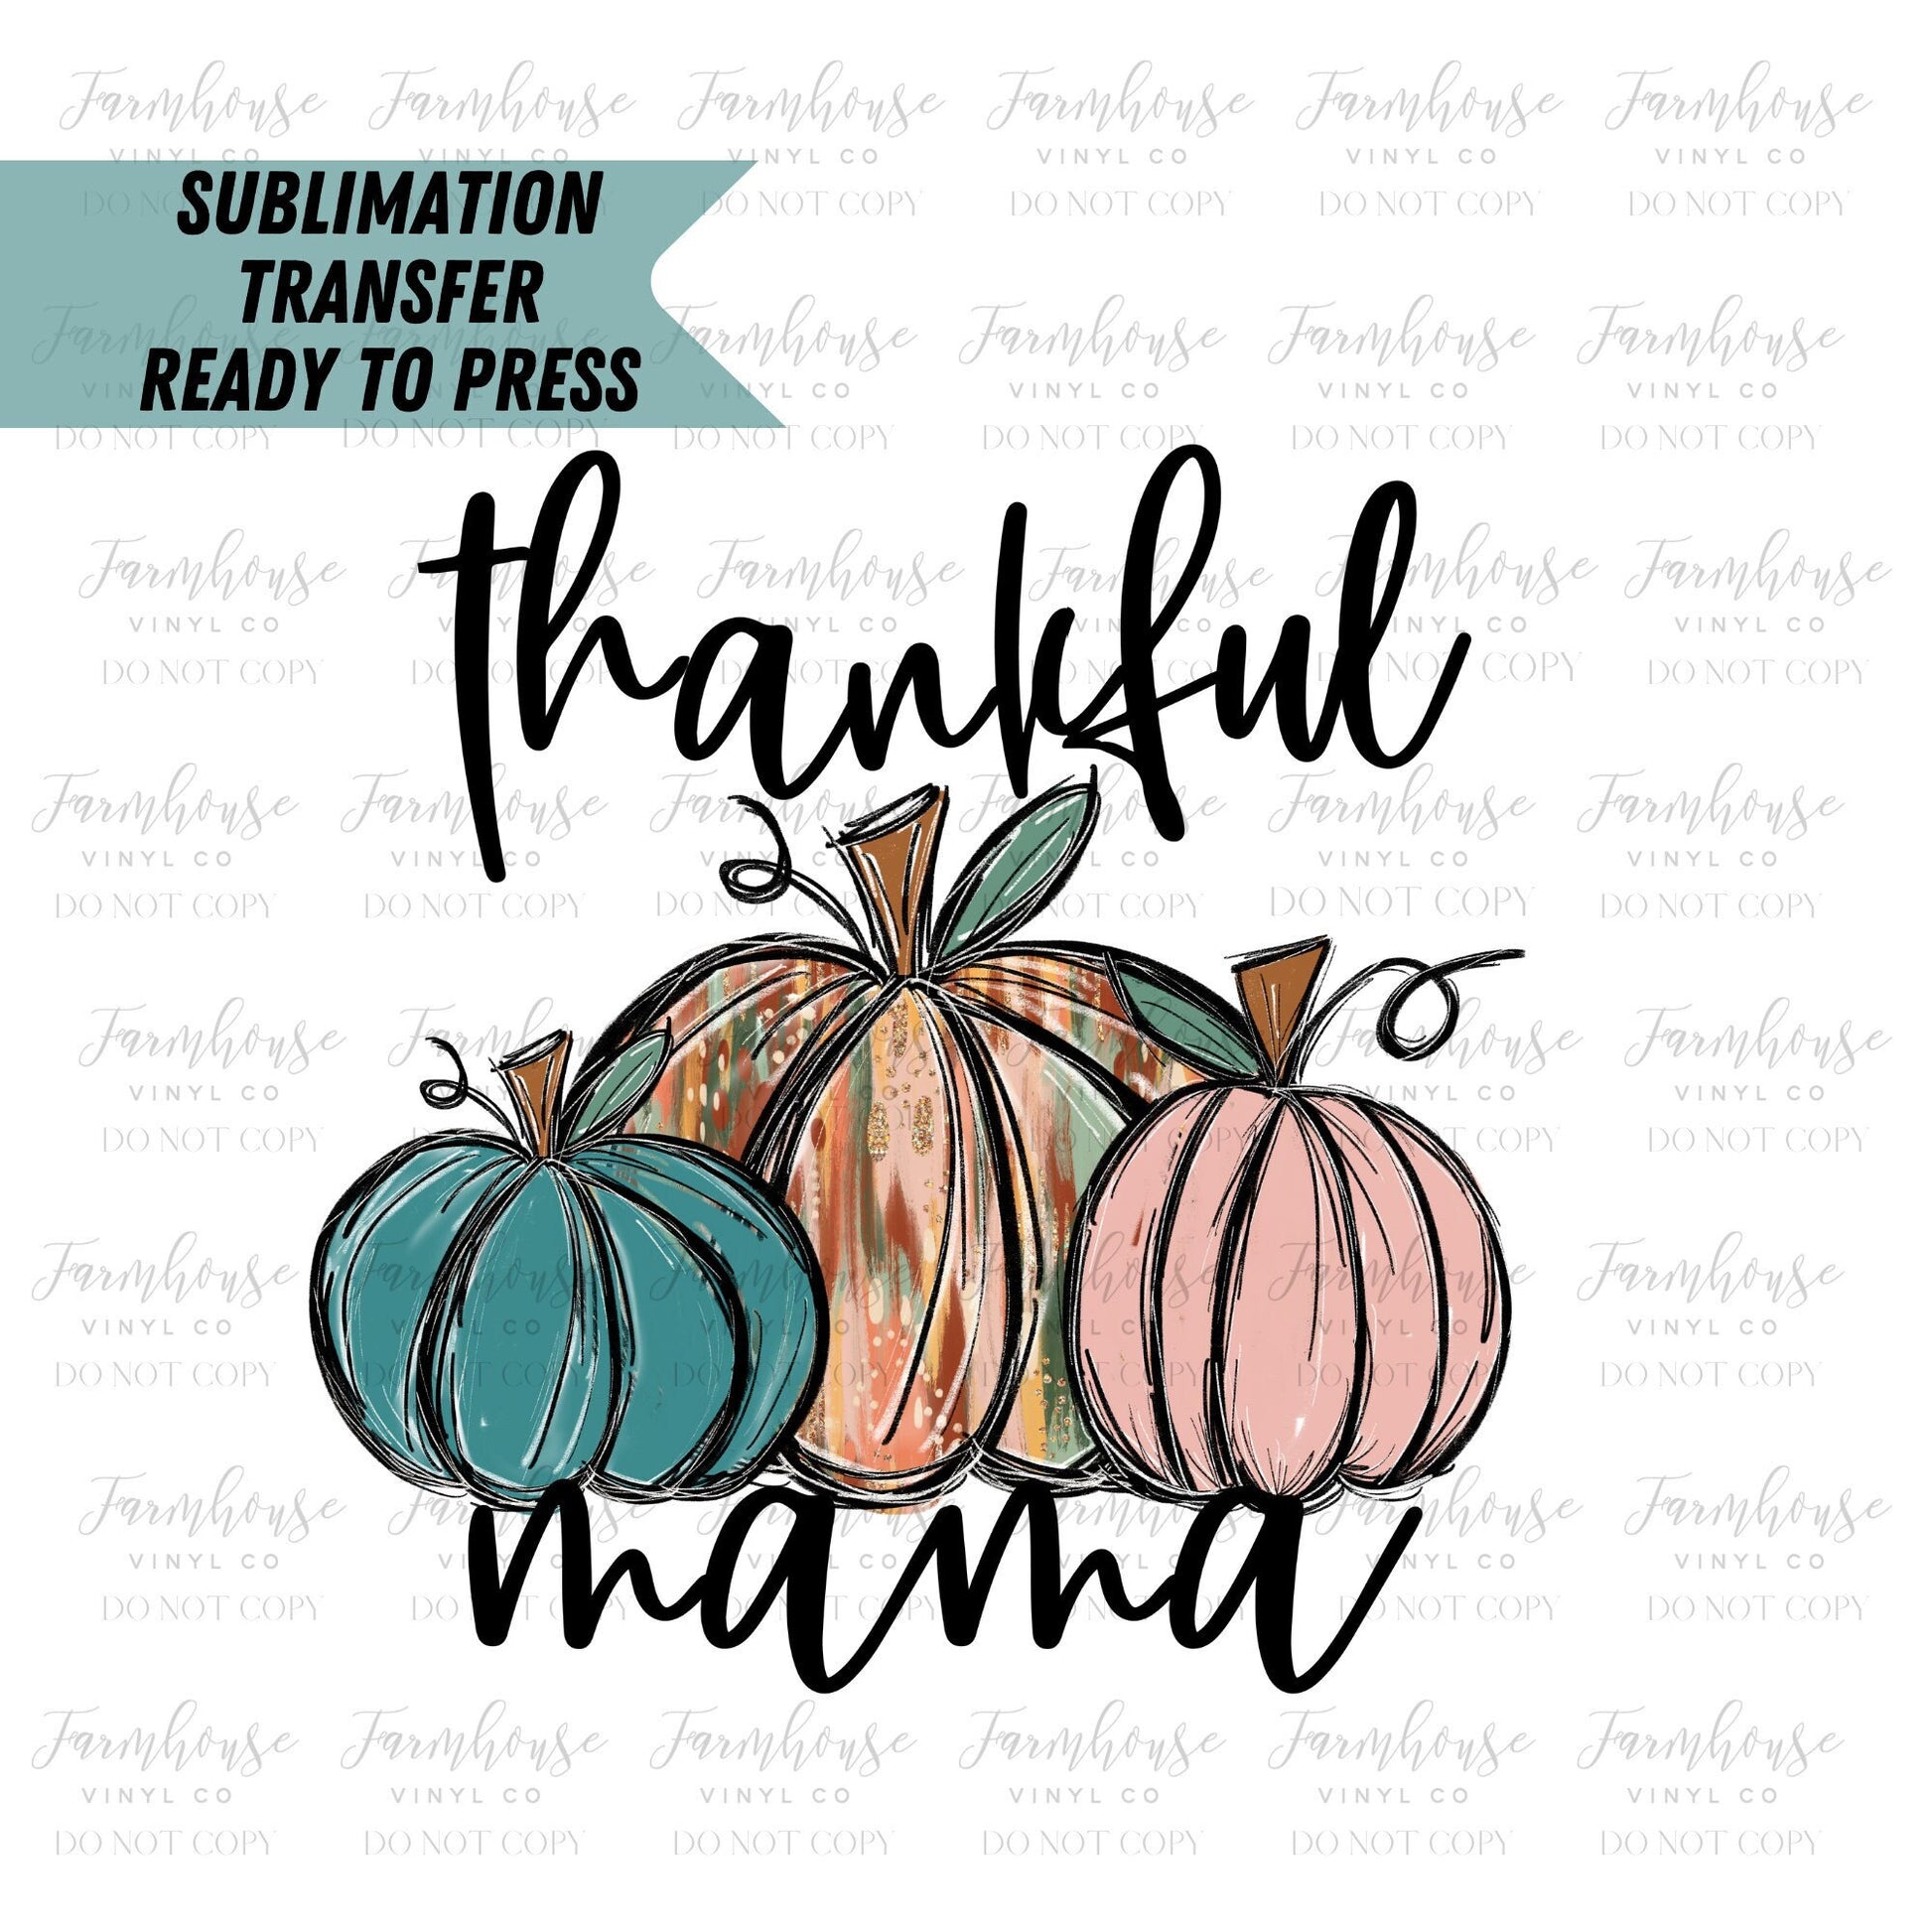 Thankful Mama Pumpkins Fall Sublimation Design, Teal Pink Pumpkin Designs, Ready To Press, Sublimation, Transfer Ready Press, Teal Pumpkin - Farmhouse Vinyl Co